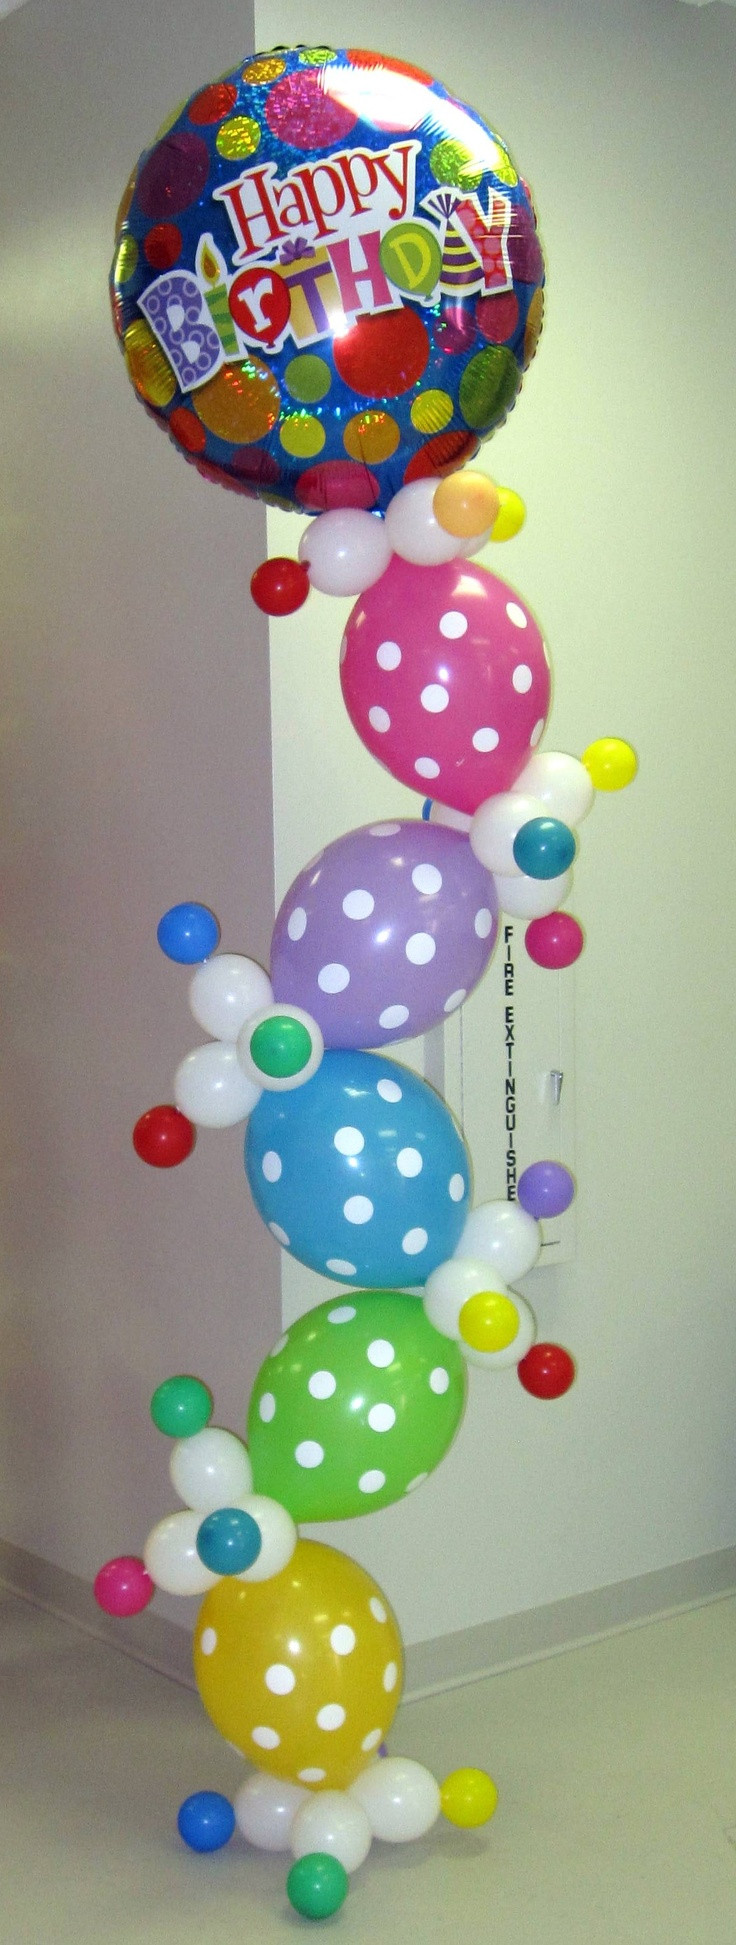 Best ideas about Birthday Balloon Ideas
. Save or Pin 25 best ideas about Happy birthday balloons on Pinterest Now.